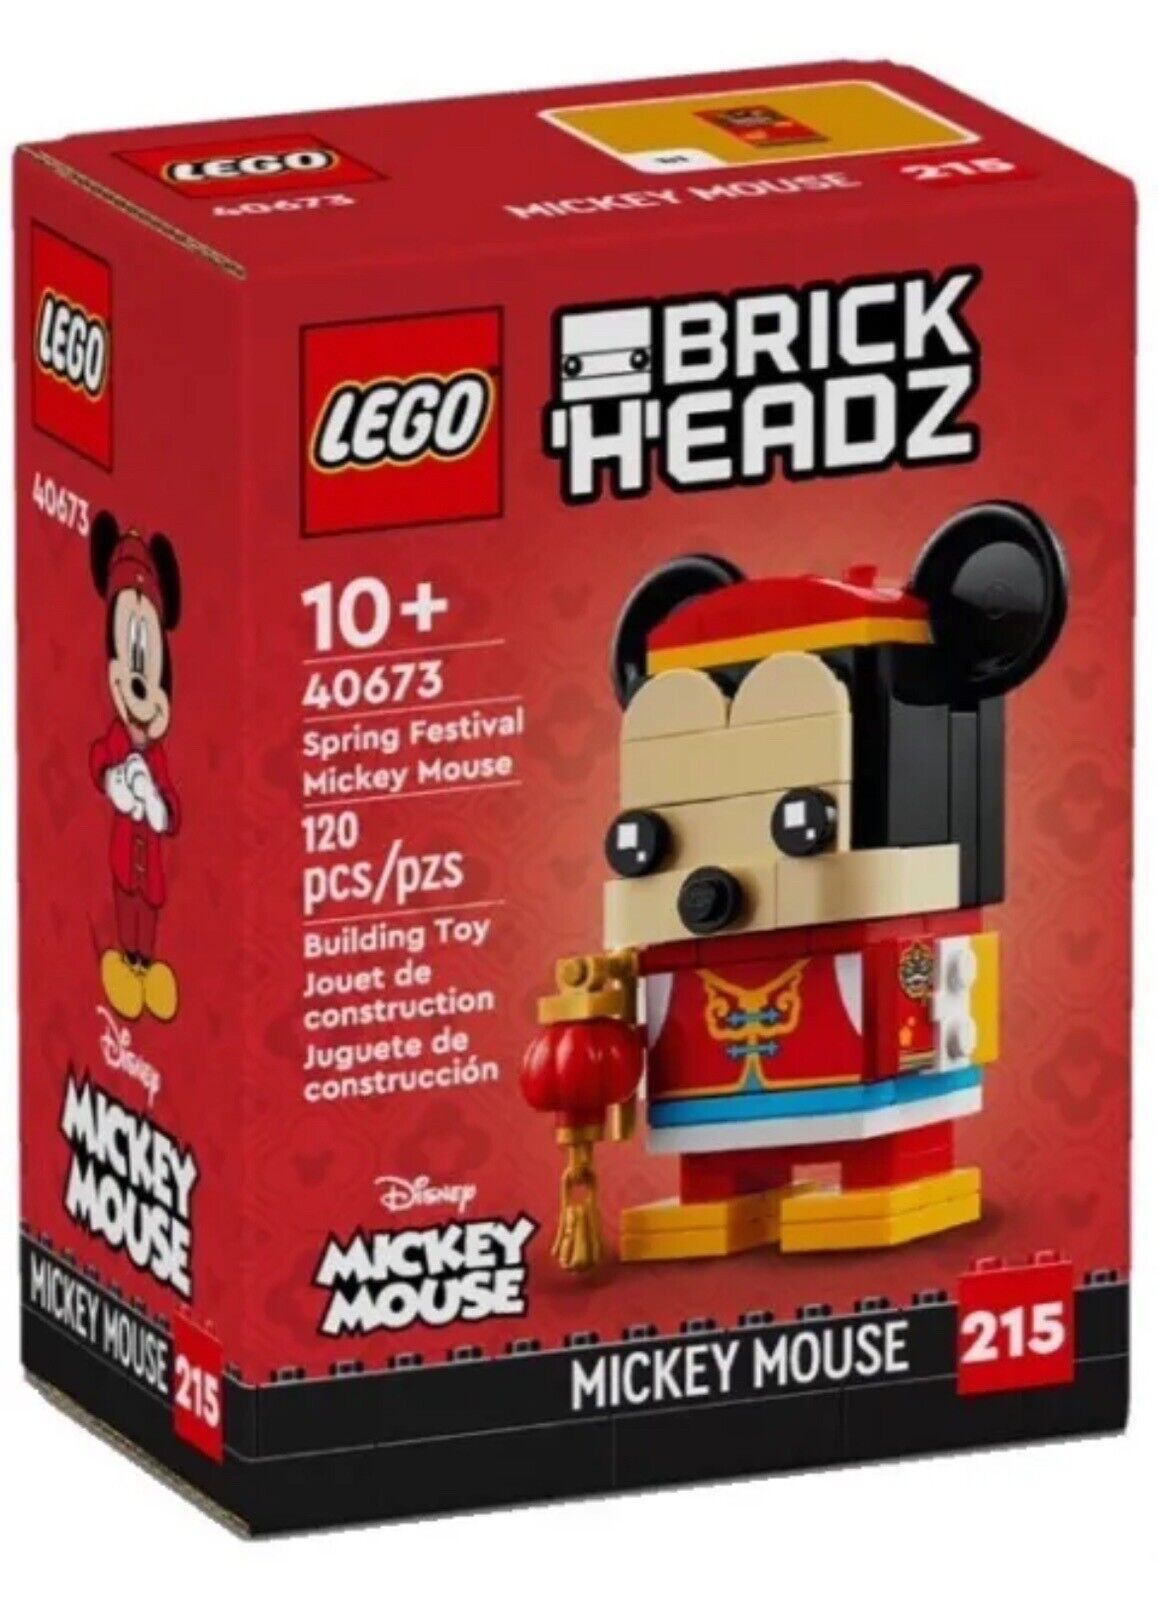 Конструктор LEGO BrickHeadz Весенний фестиваль Микки Мауса 40673, 120 дет. конструктор lego brickheadz французский бульдог 40544